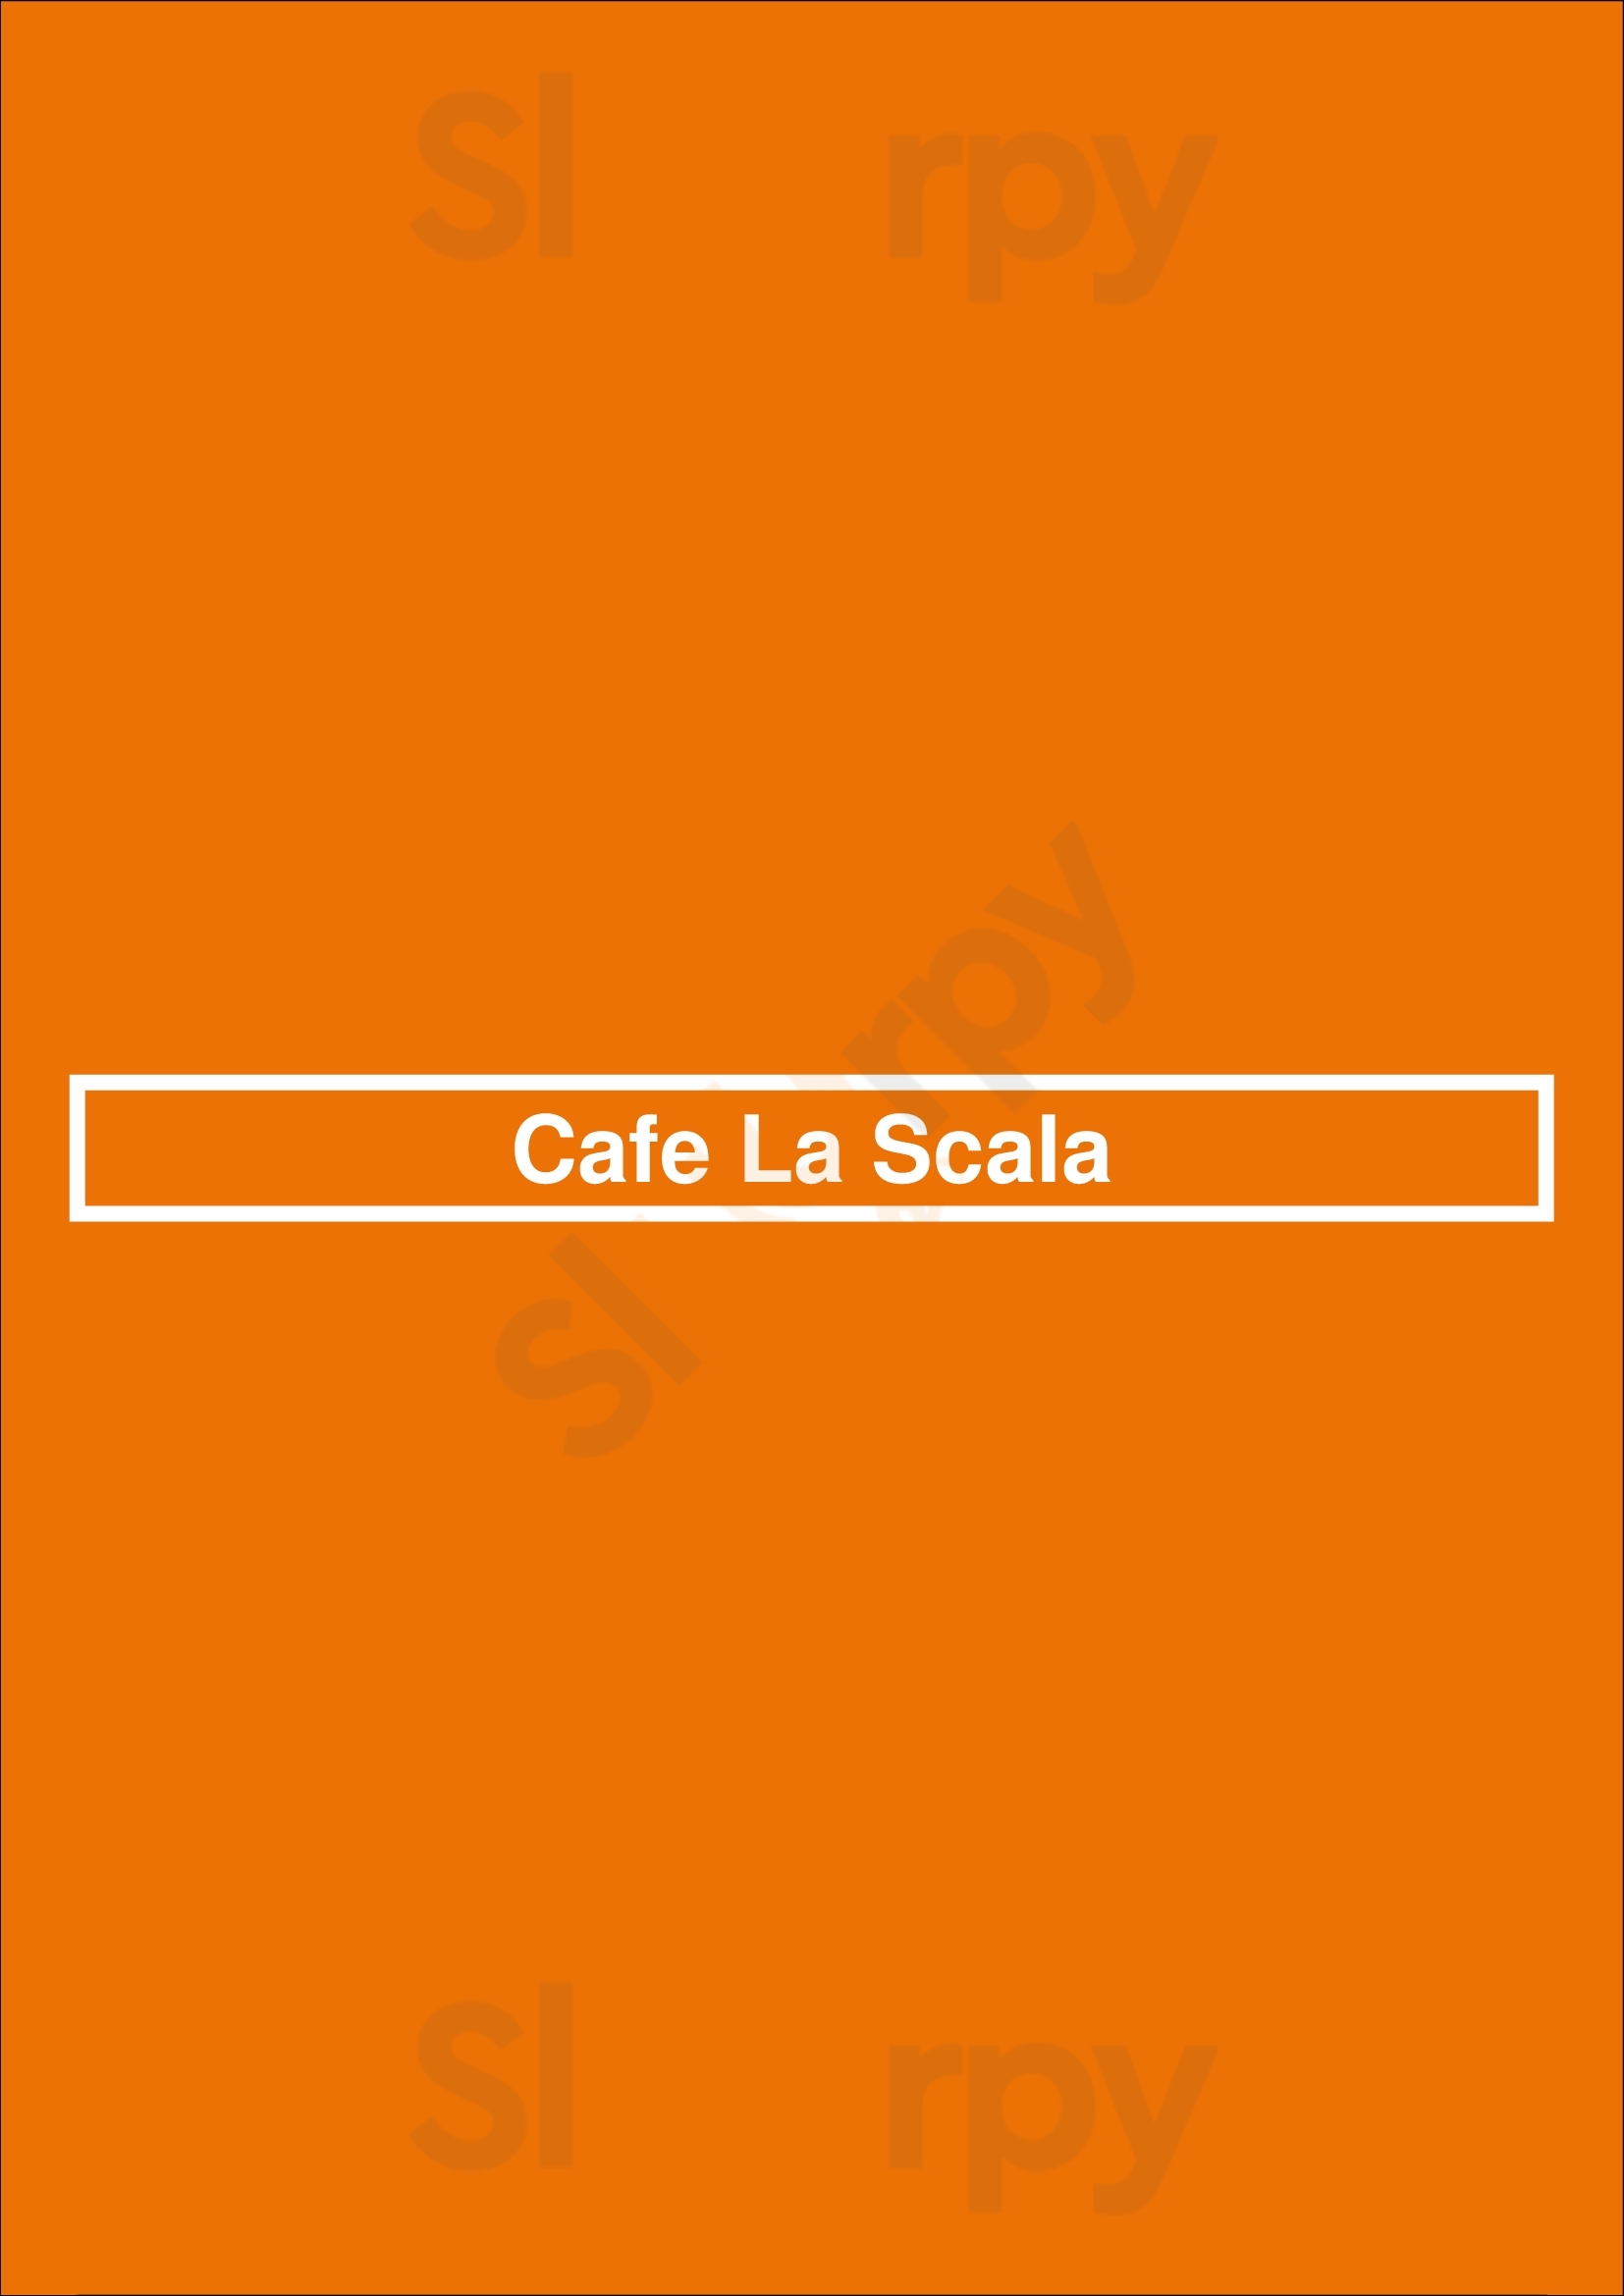 Cafe La Scala Winnipeg Menu - 1